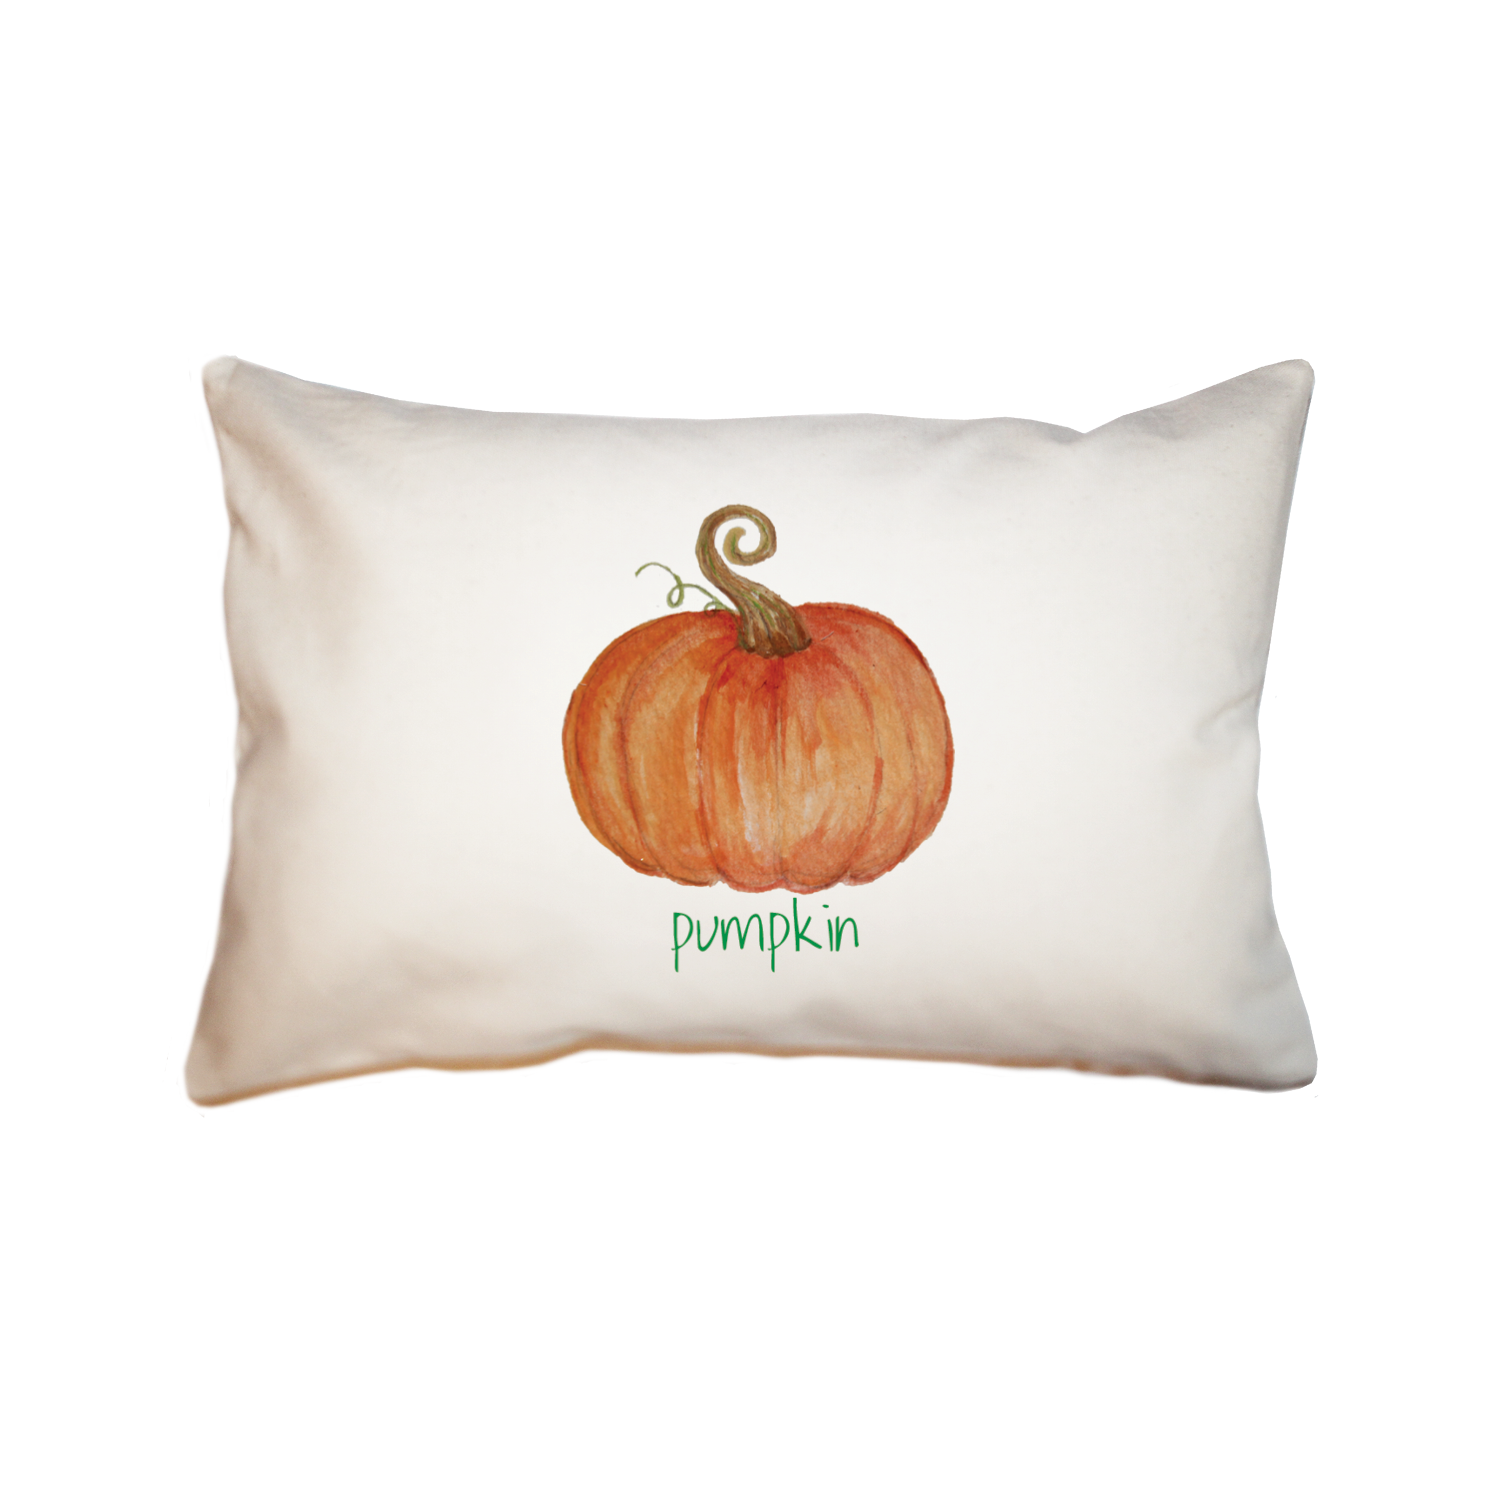 Pumpkin with pumpkin text large rectangle pillow